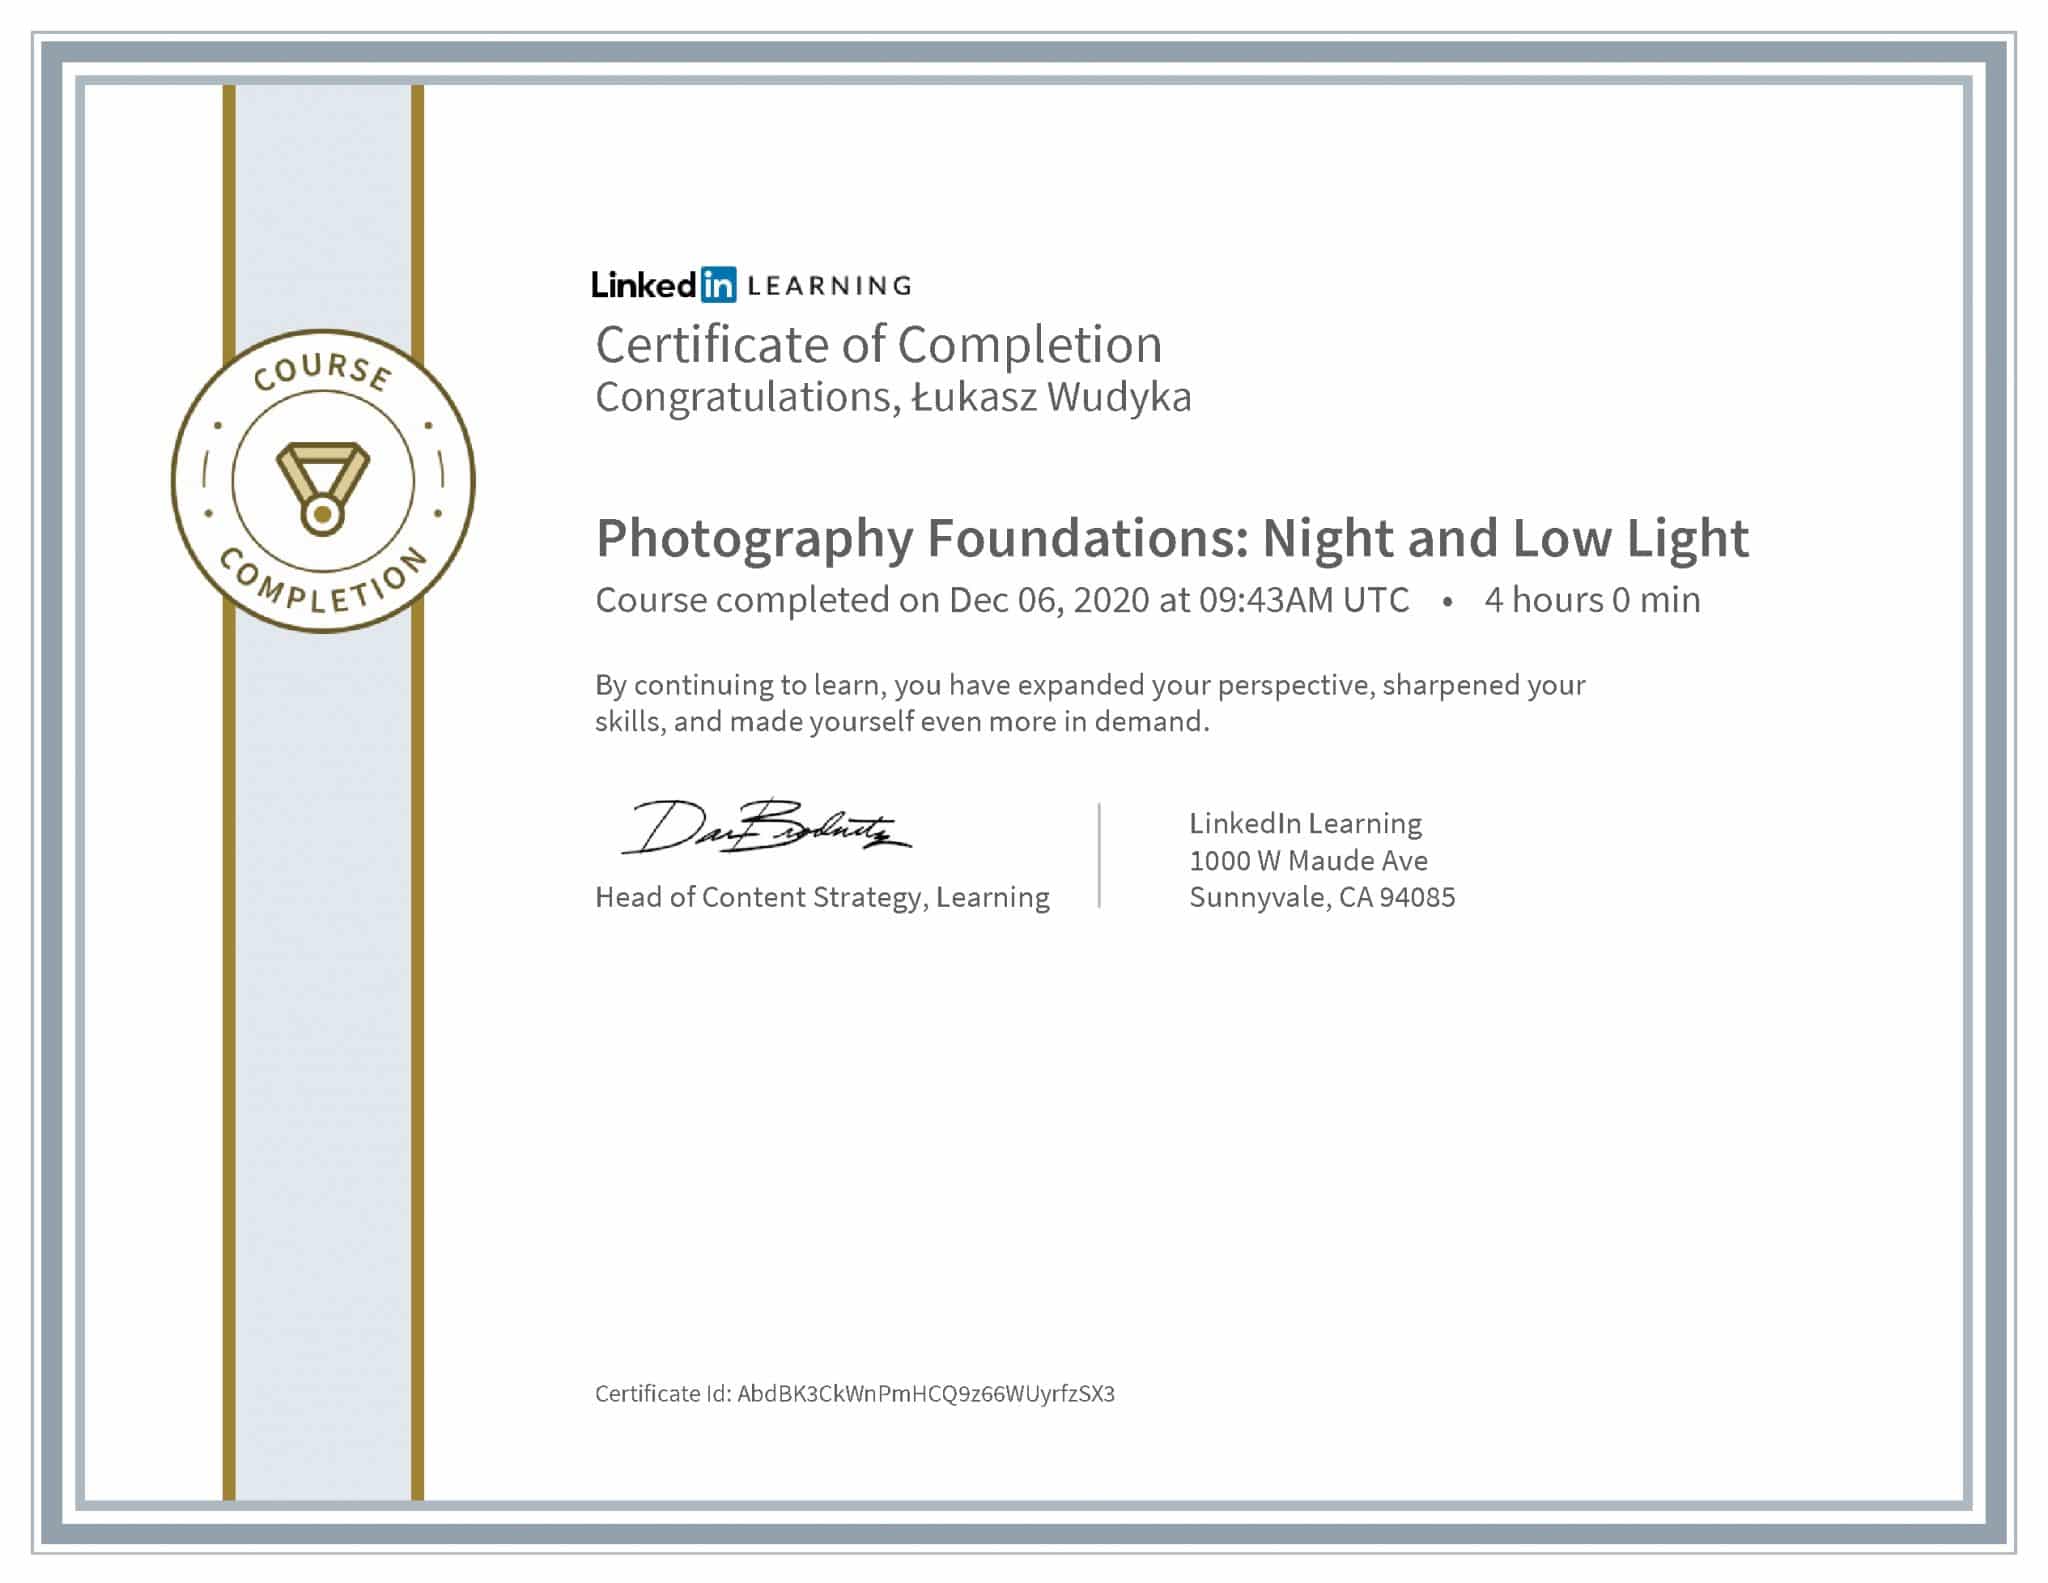 Łukasz Wudyka certyfikat LinkedIn Photography Foundations: Night and Low Light